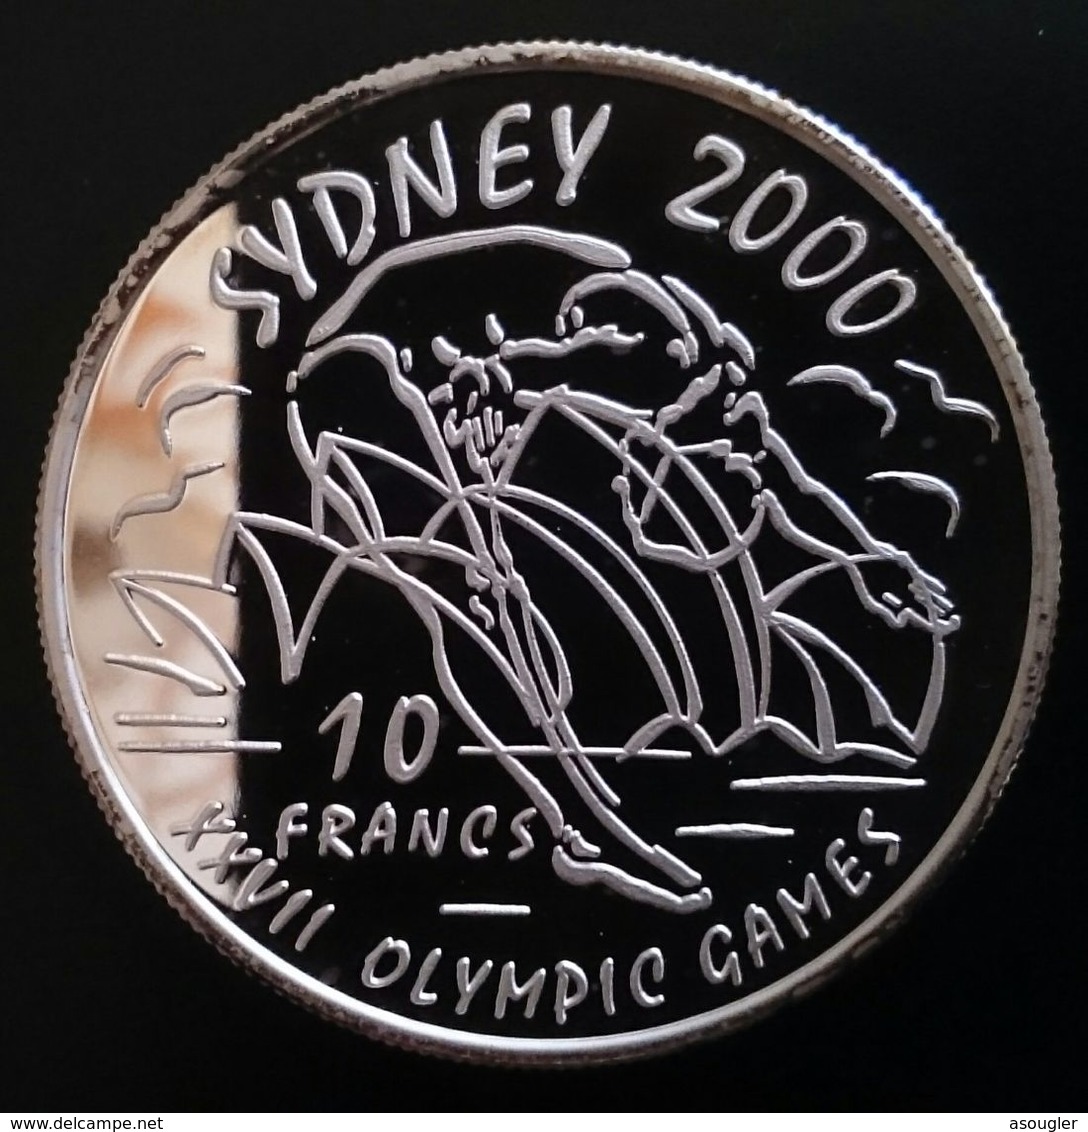 Congo Democratic Republic 10 Francs 1999 SILVER PROOF "Sydney 2000" Free Shipping Via Registered Air Mail - Kongo (Dem. Republik 1998)